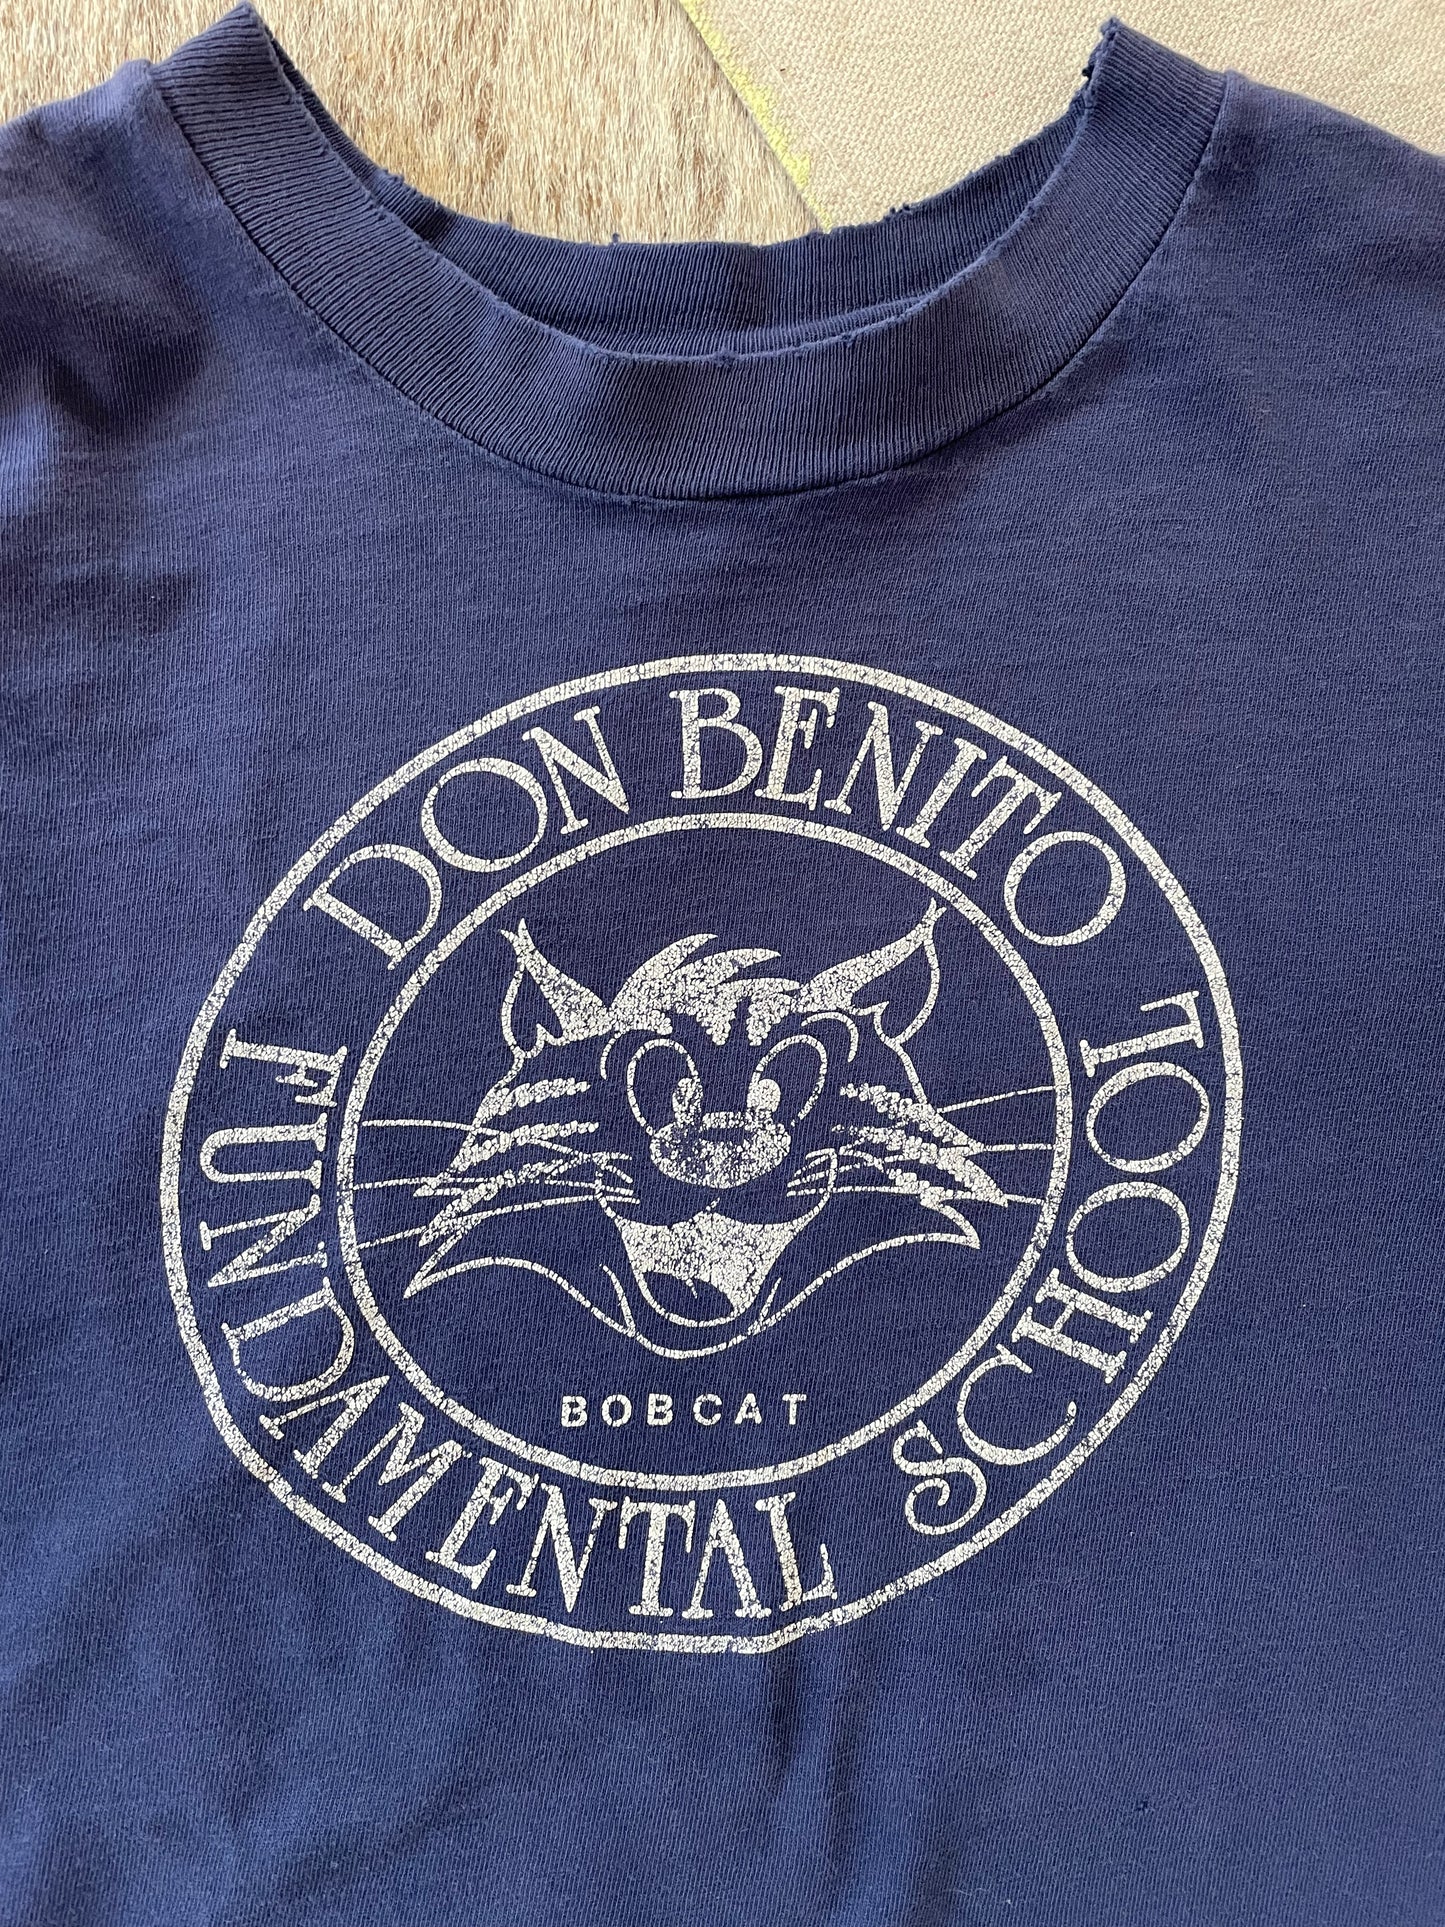 90s Don Benito Fundamental School Bobcats Tee